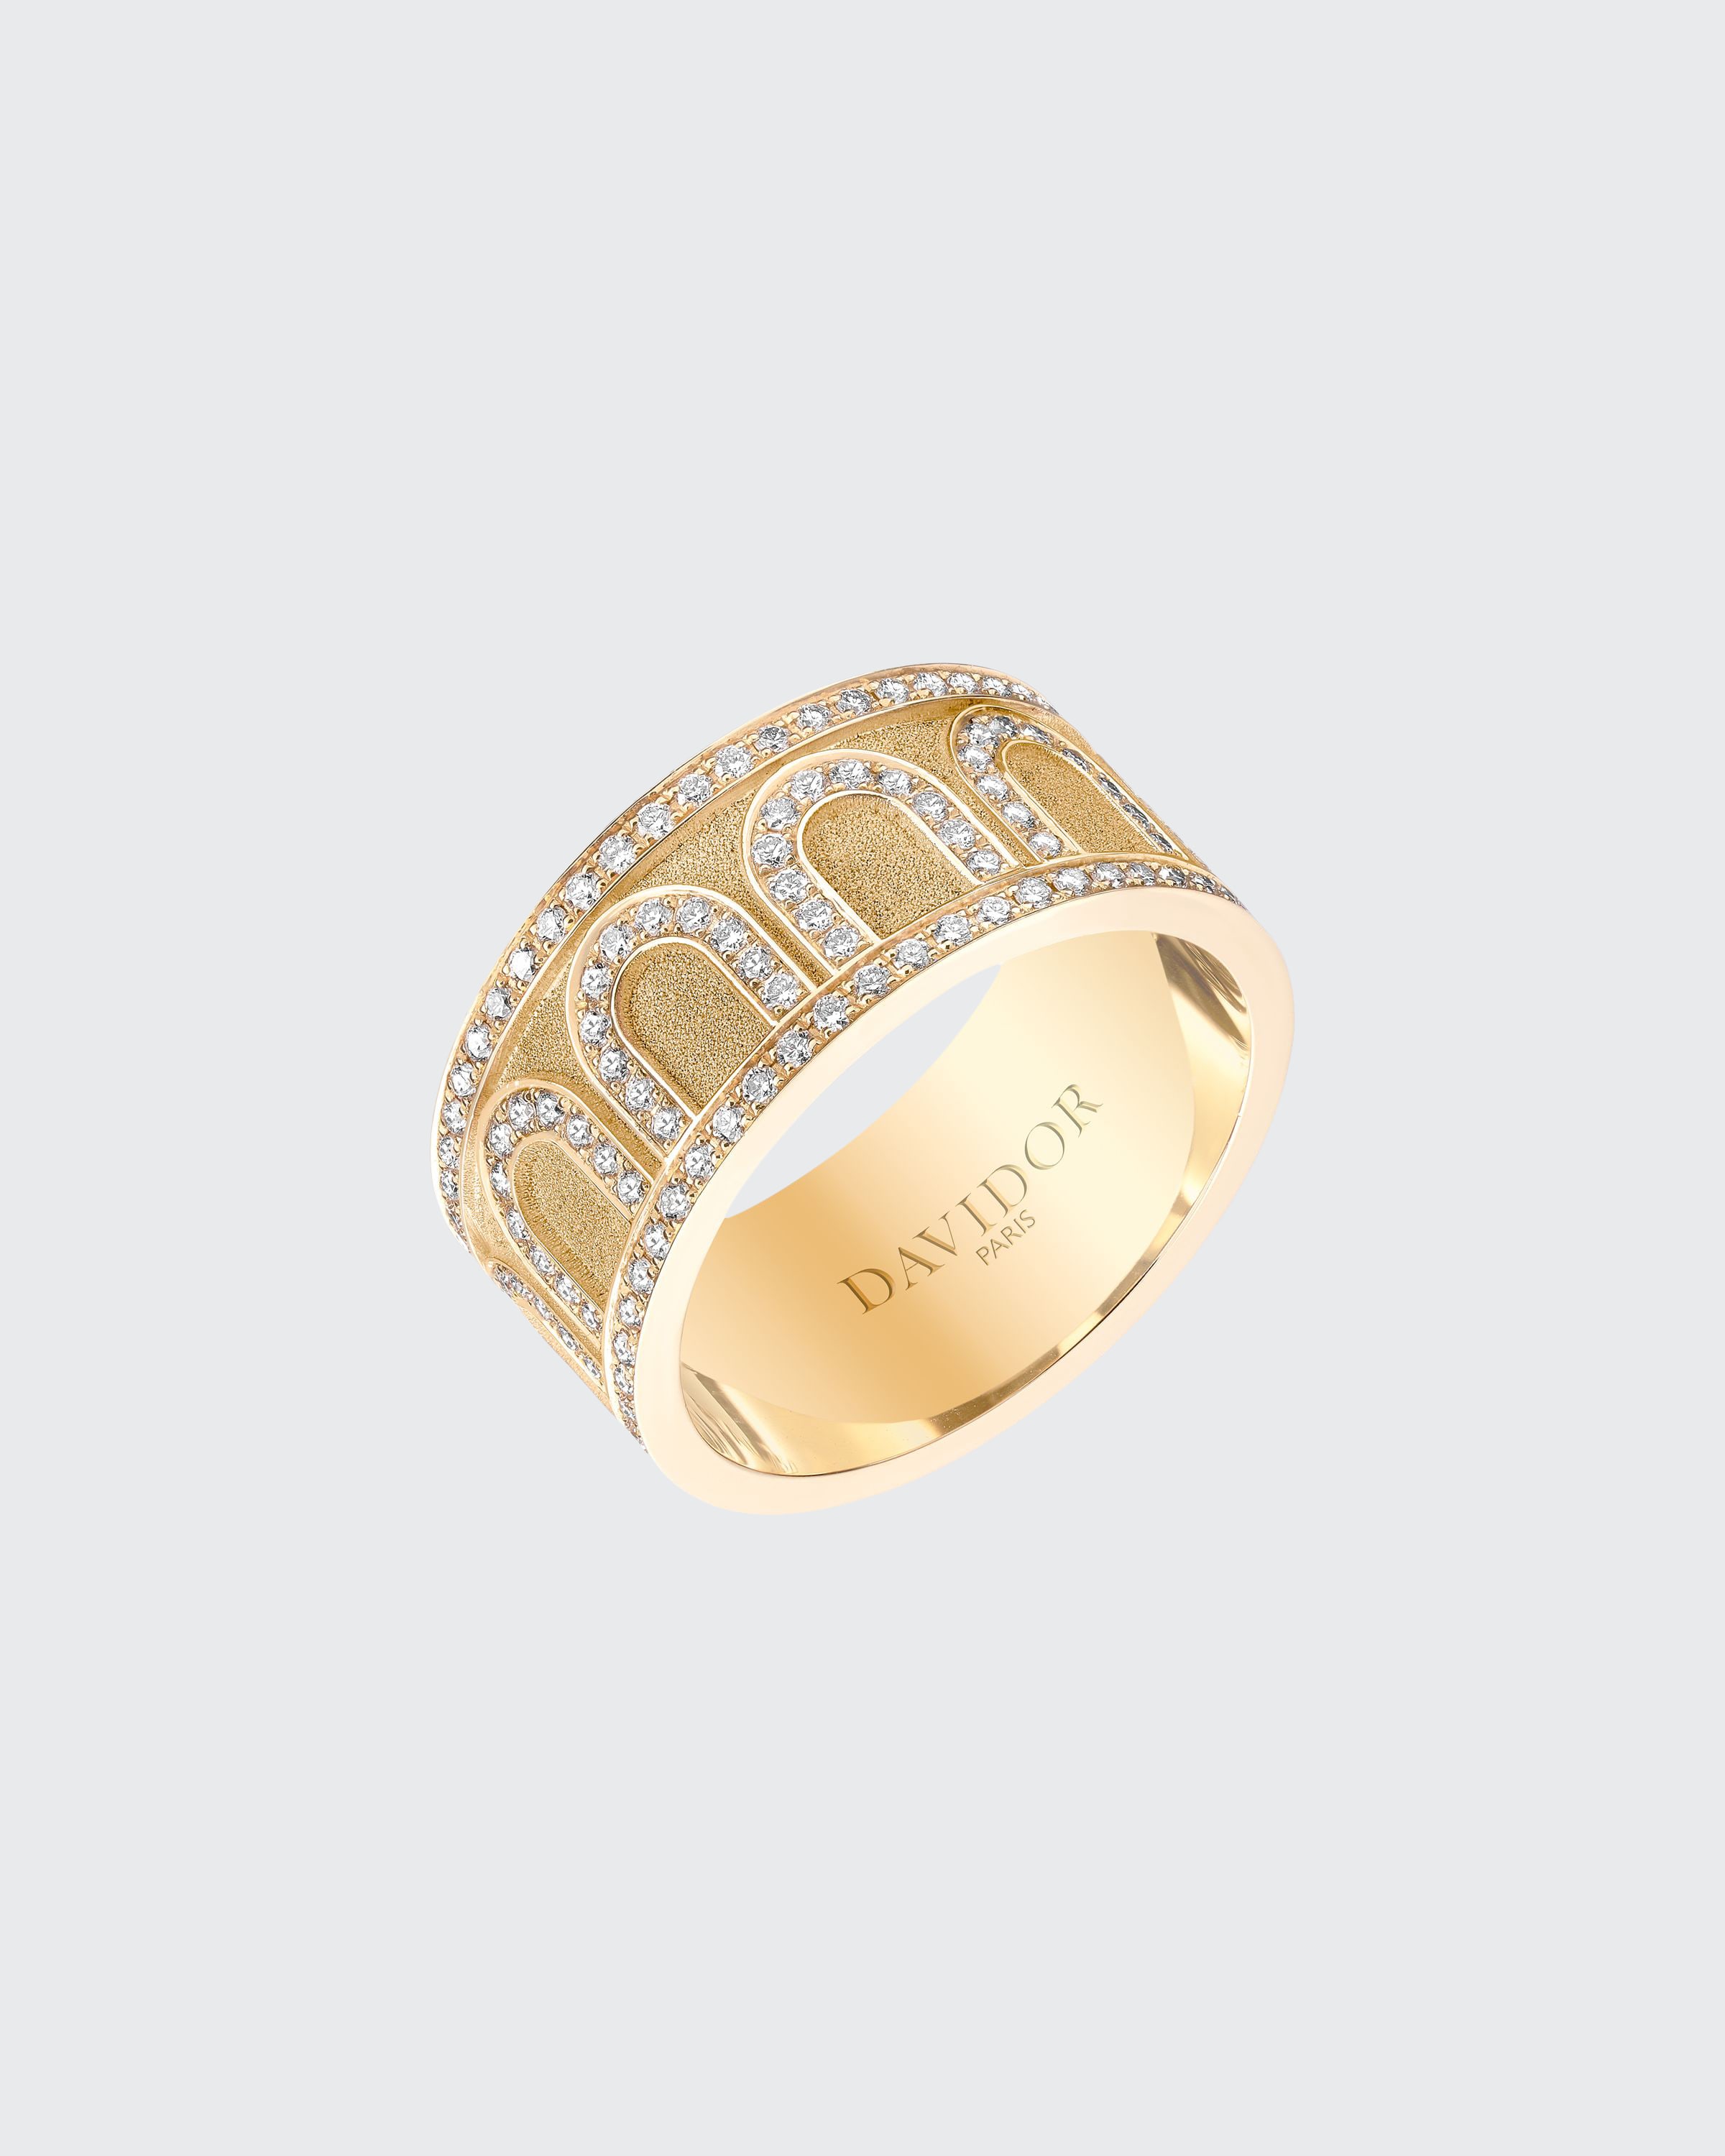 DAVIDOR L'Arc de Davidor 18k Gold Diamond Ring - Grand Model, Sz. 6.5